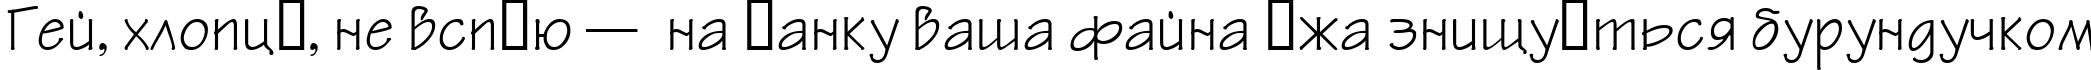 Пример написания шрифтом TechnicalDi текста на украинском